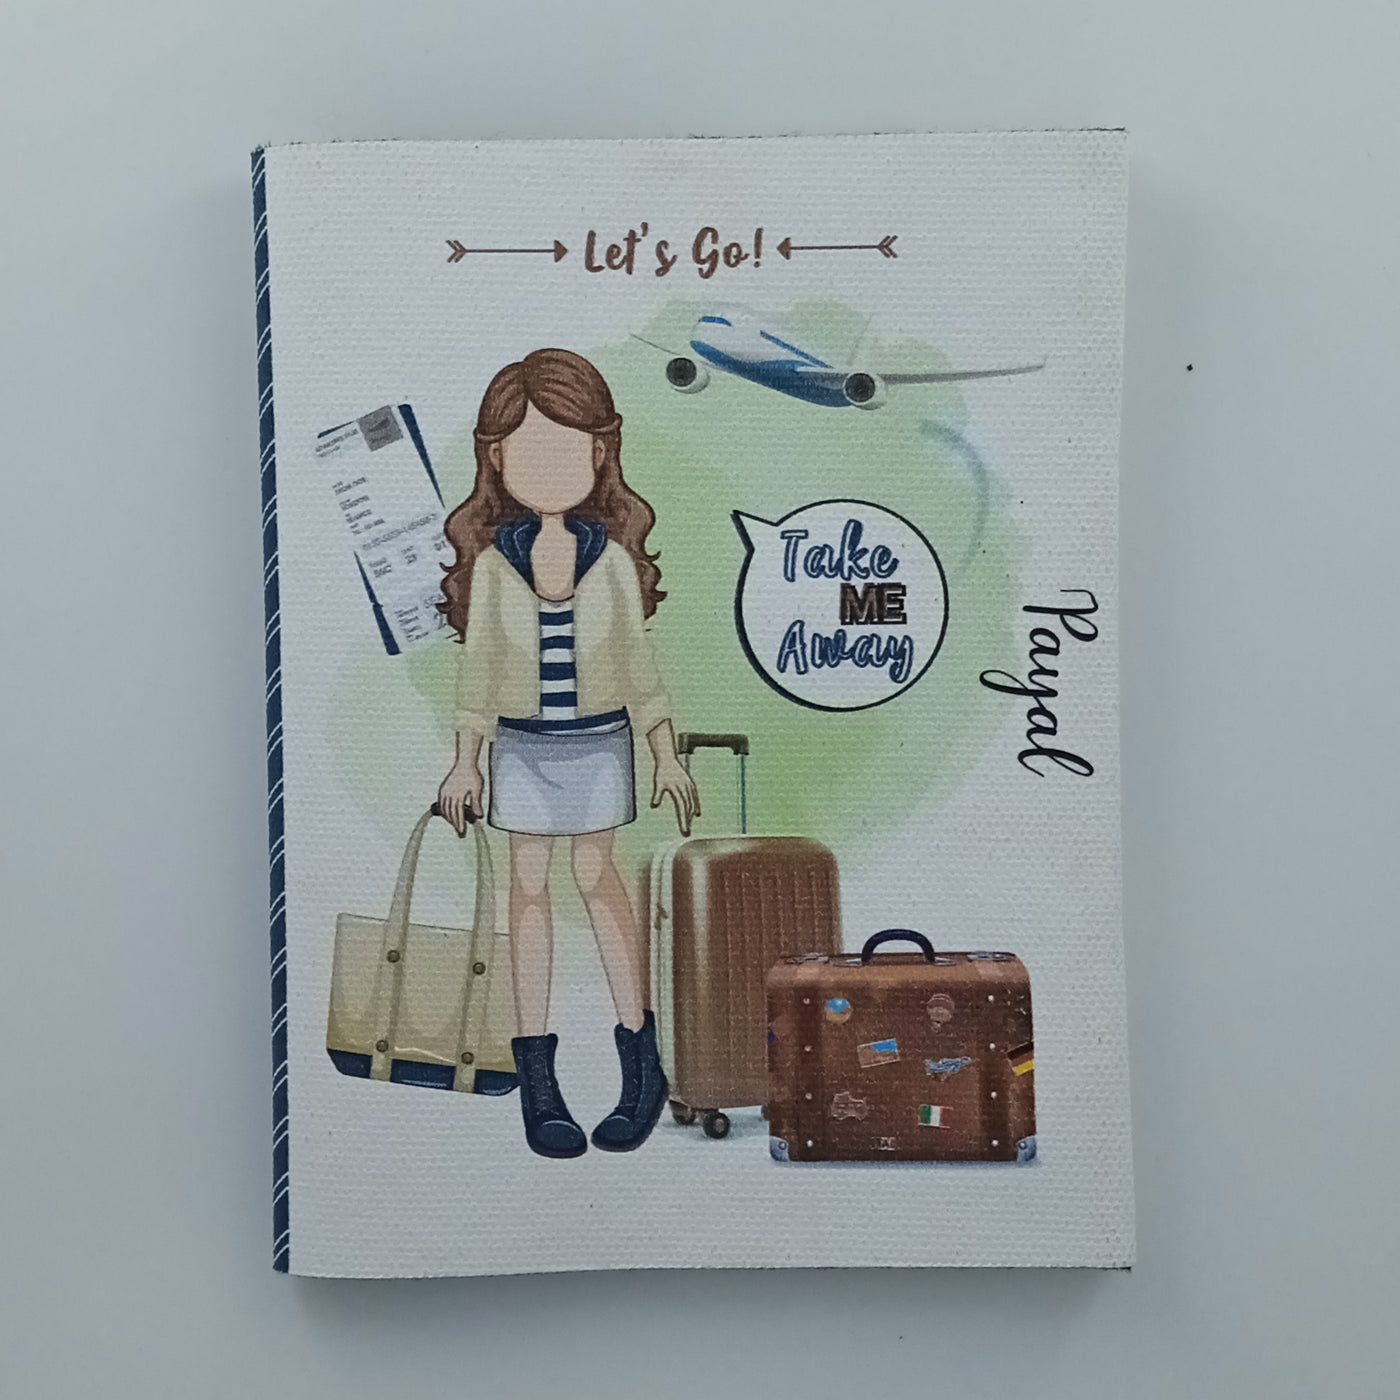 Cotton Canvas Traveller Chic Passport Cover - Teal & Beige